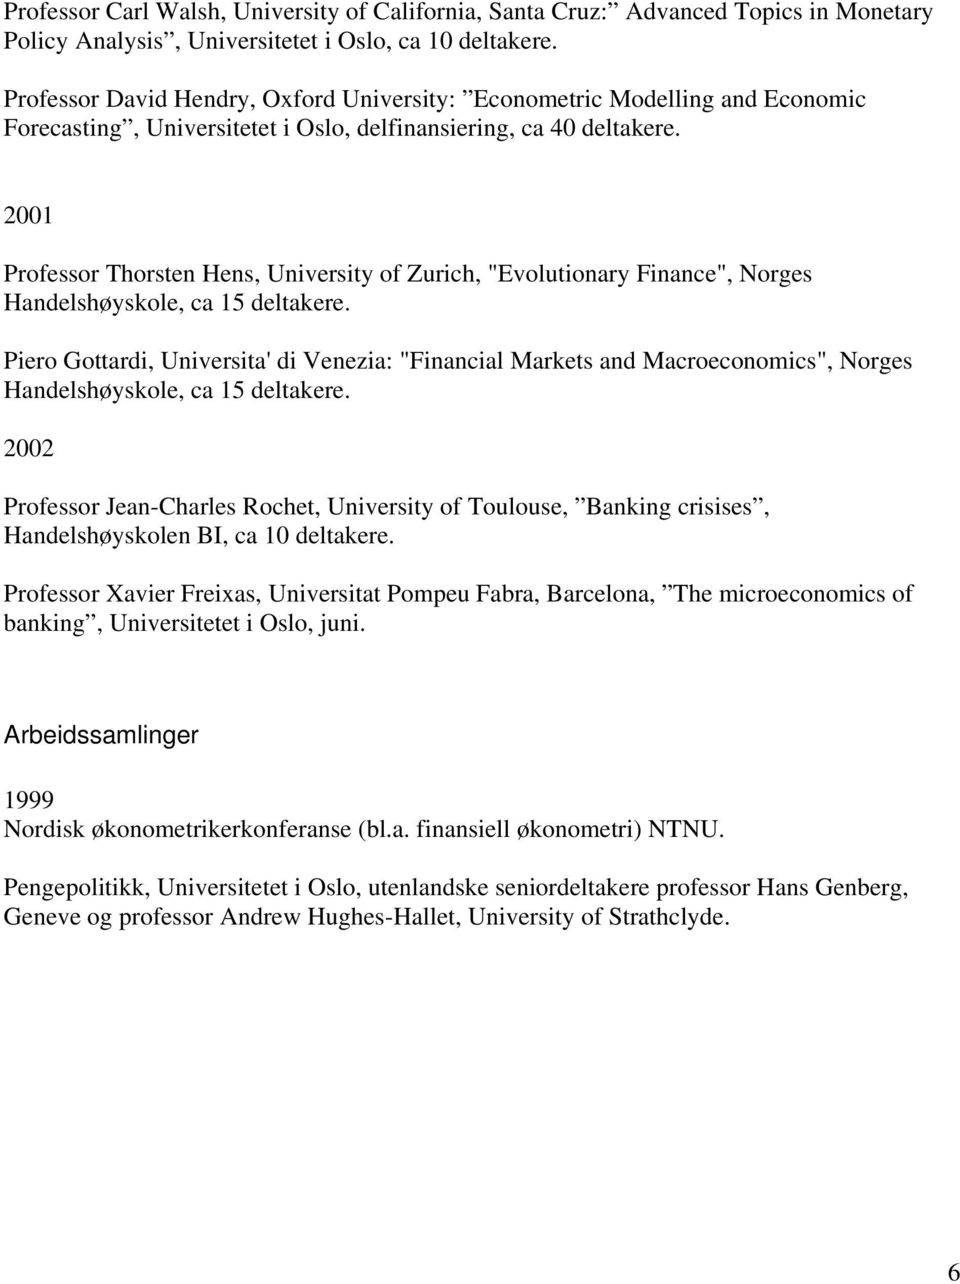 2001 Professor Thorsten Hens, University of Zurich, "Evolutionary Finance", Norges Handelshøyskole, ca 15 deltakere.